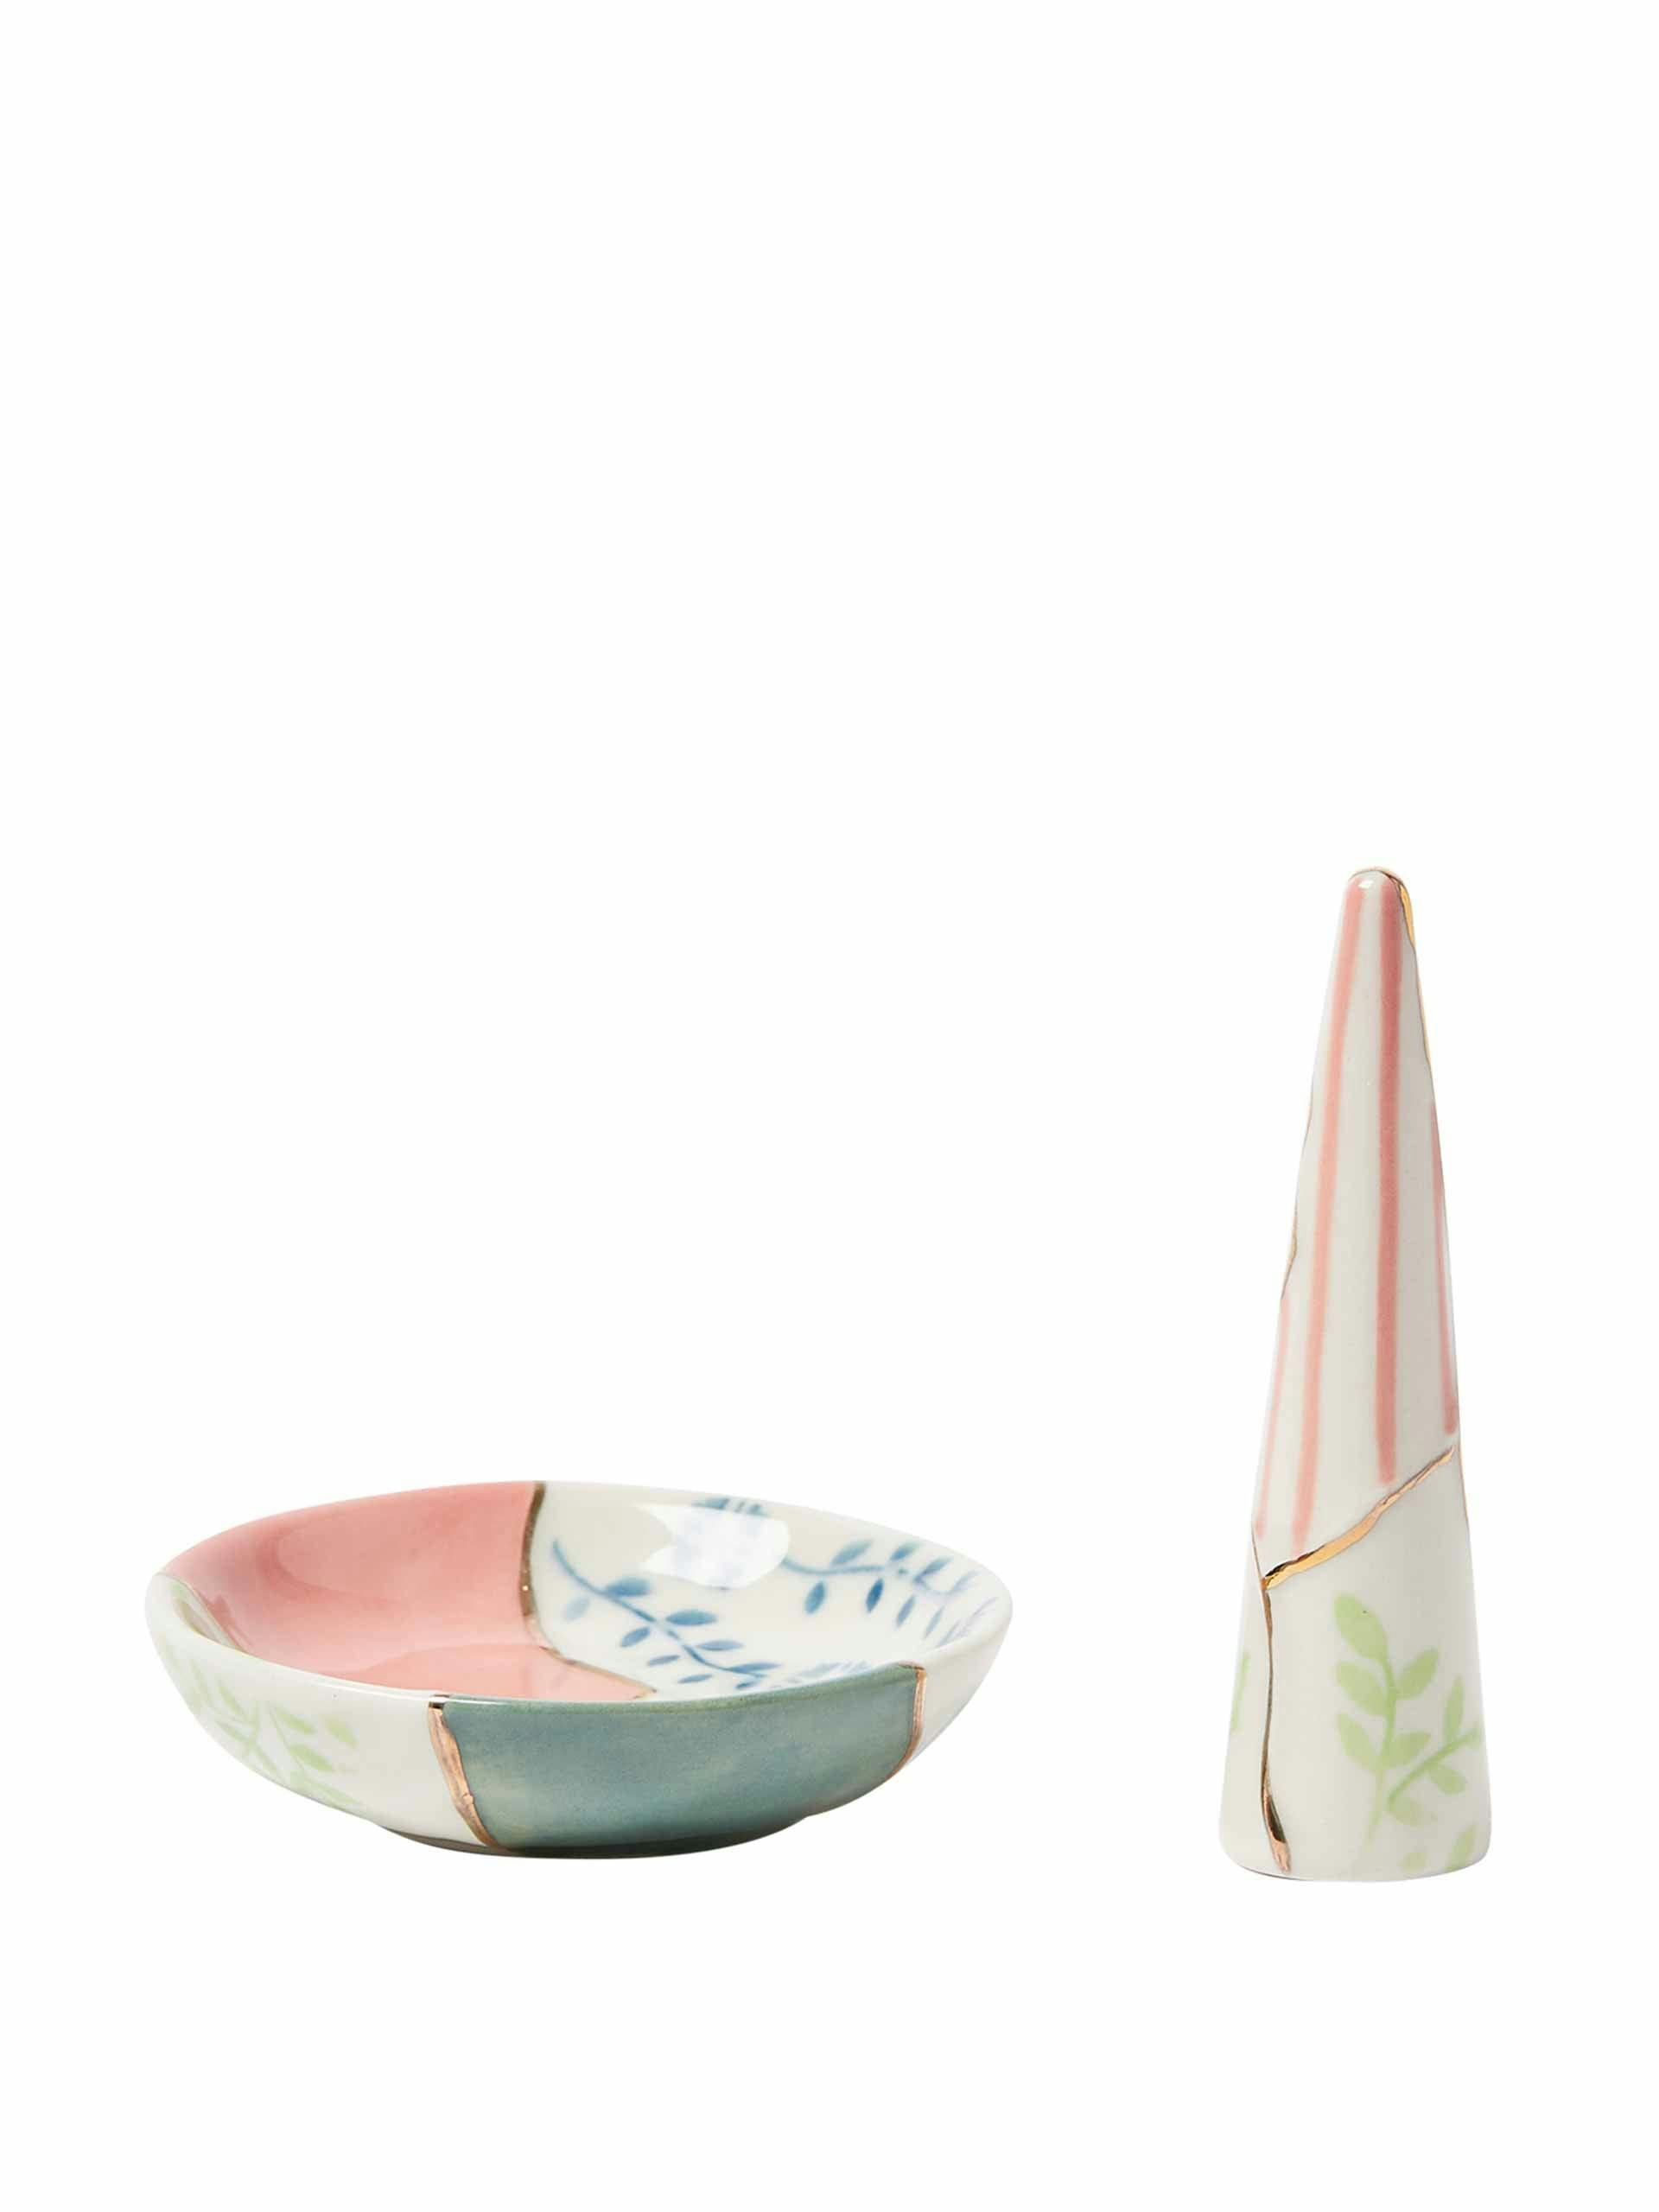 Ashbee pink ceramic ring holder and trinket dish (set of 2)